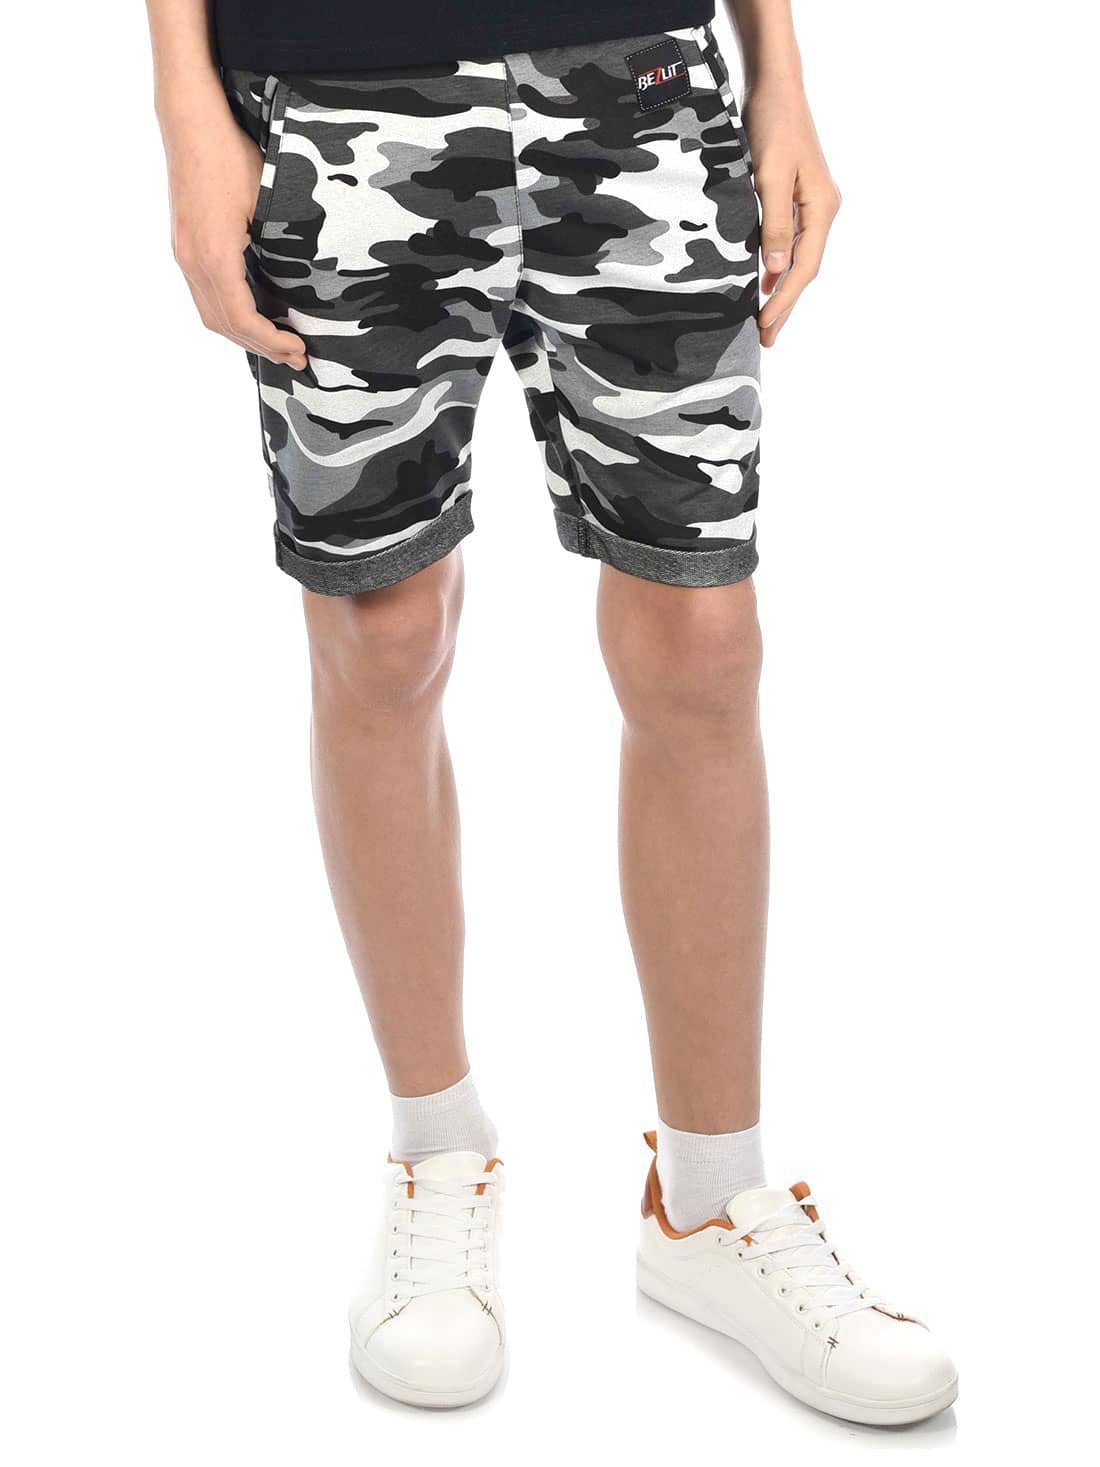 BEZLIT Shorts Kinder Jungen Stoff Shorts (1-tlg) Camouflage-Schwarz | Shorts